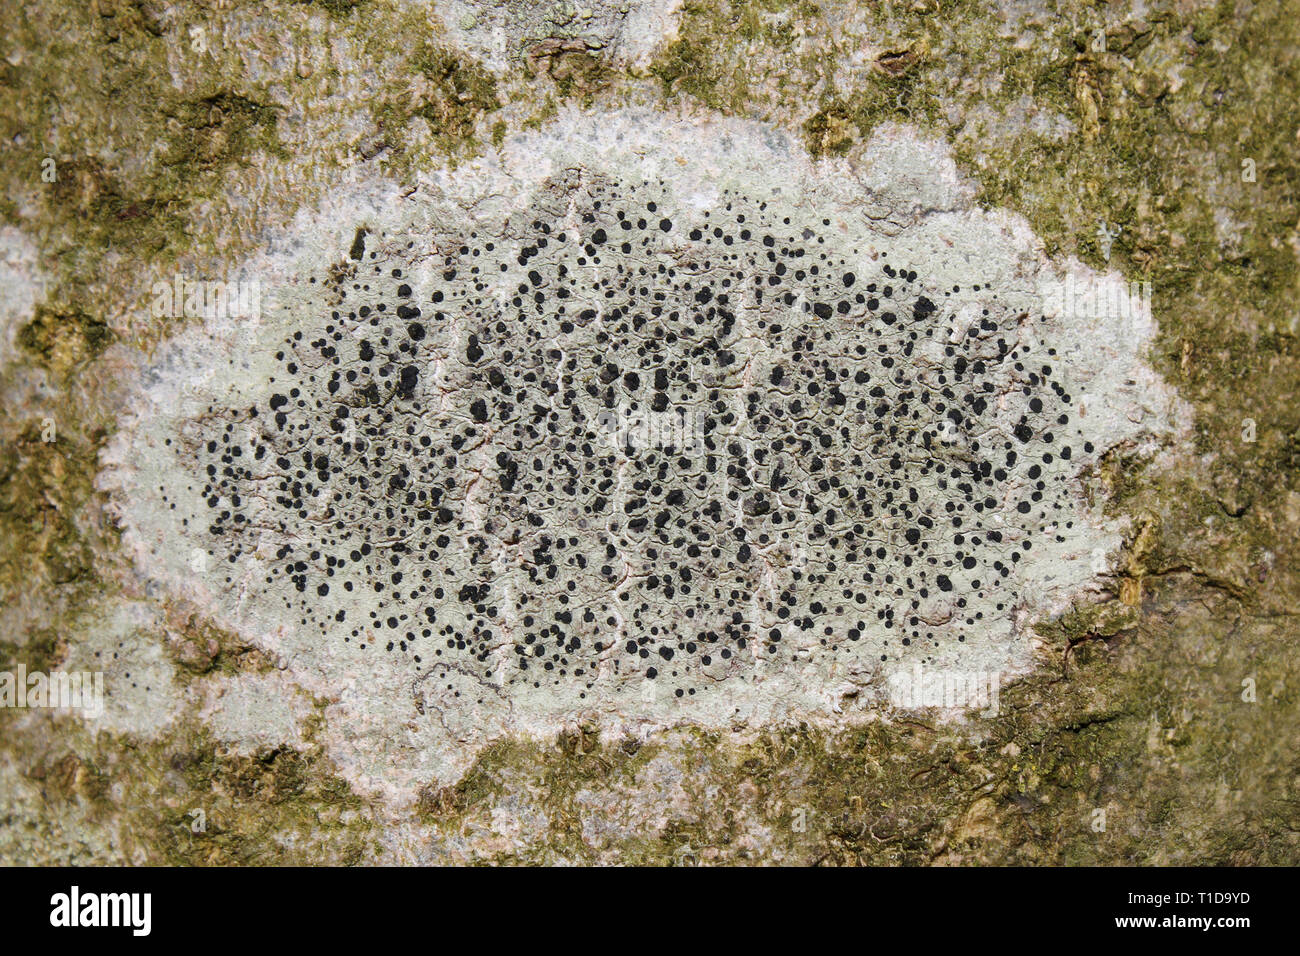 Lichen - Lecidella elaeochroma - on Bark of Ash Fraxinus excelsior Stock Photo